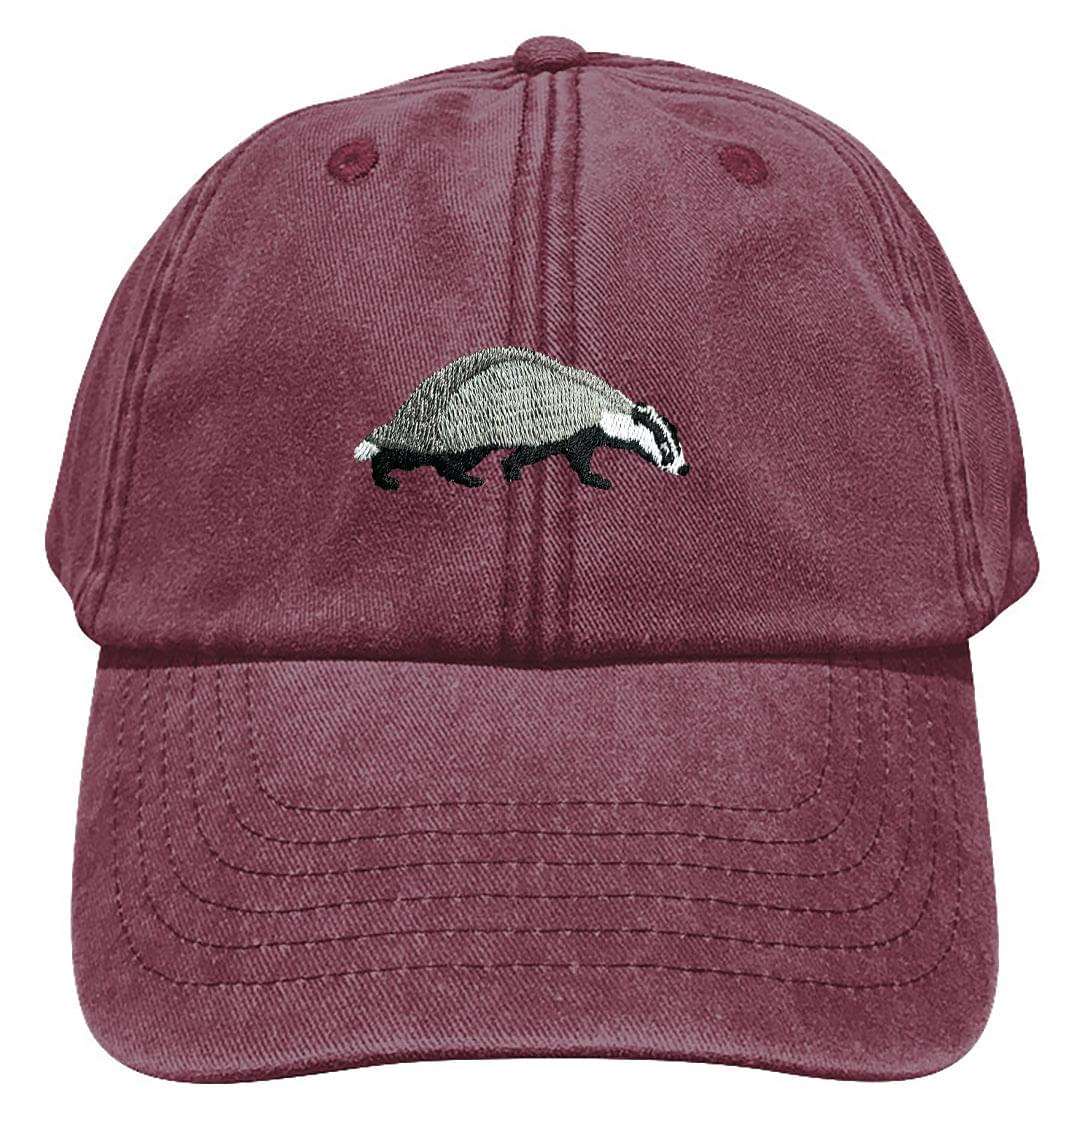 Animal Baseball Caps - Wildlife & Sea Life Embroidered Hats - Blue